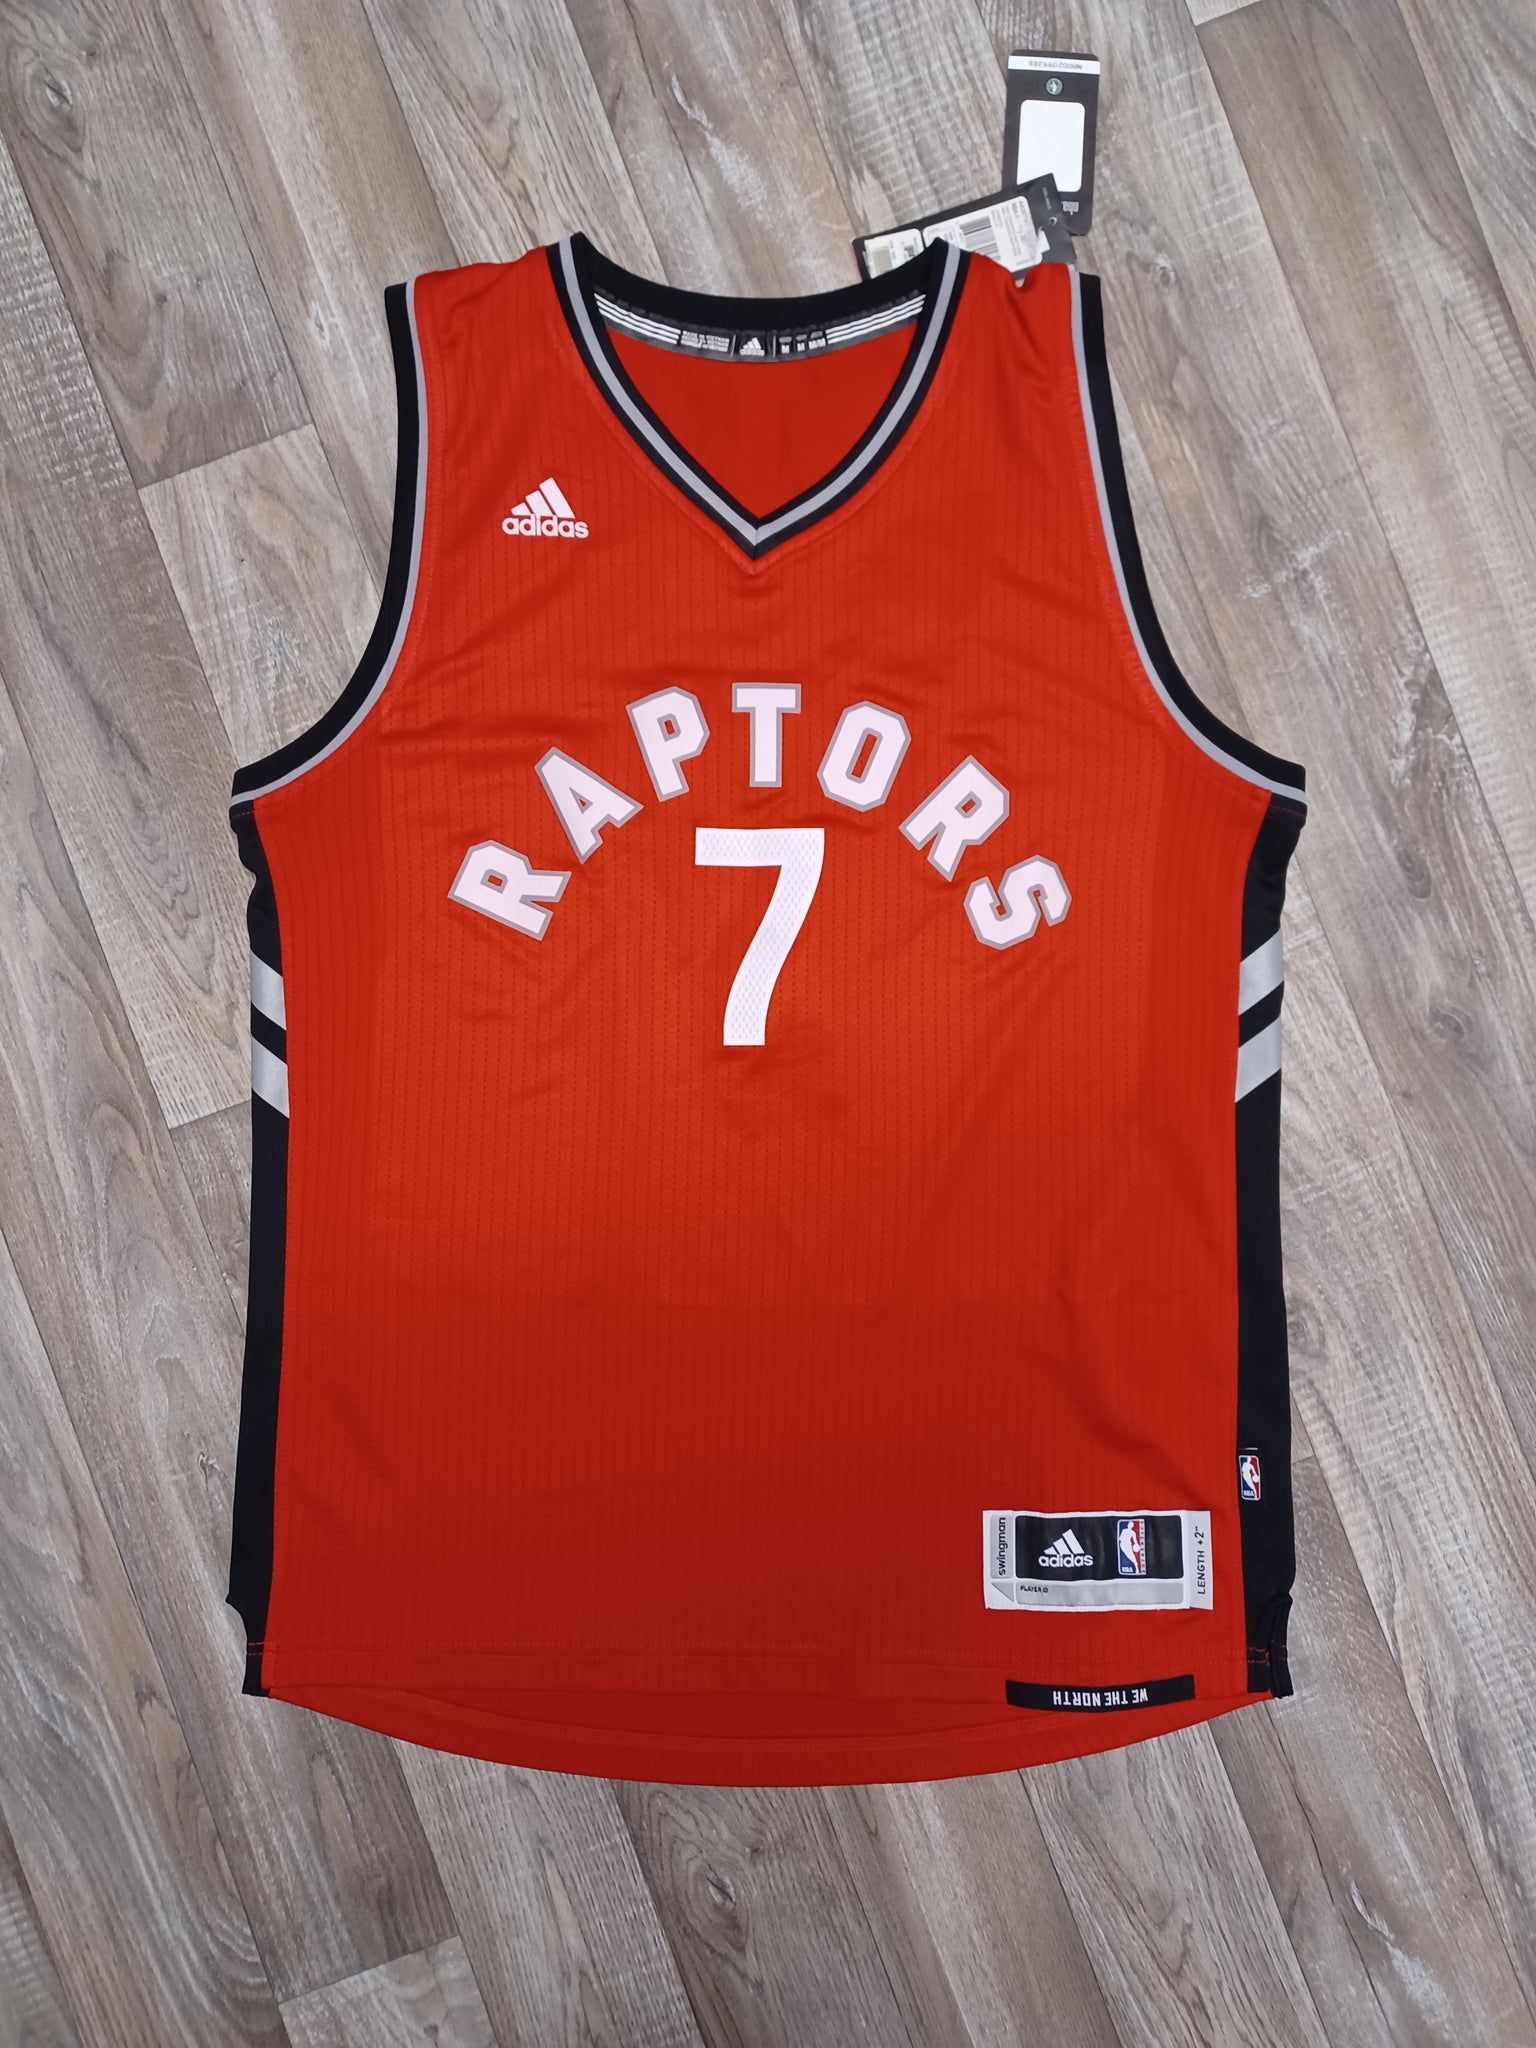 Toronto Raptors Jerseys, Raptors Basketball Jerseys